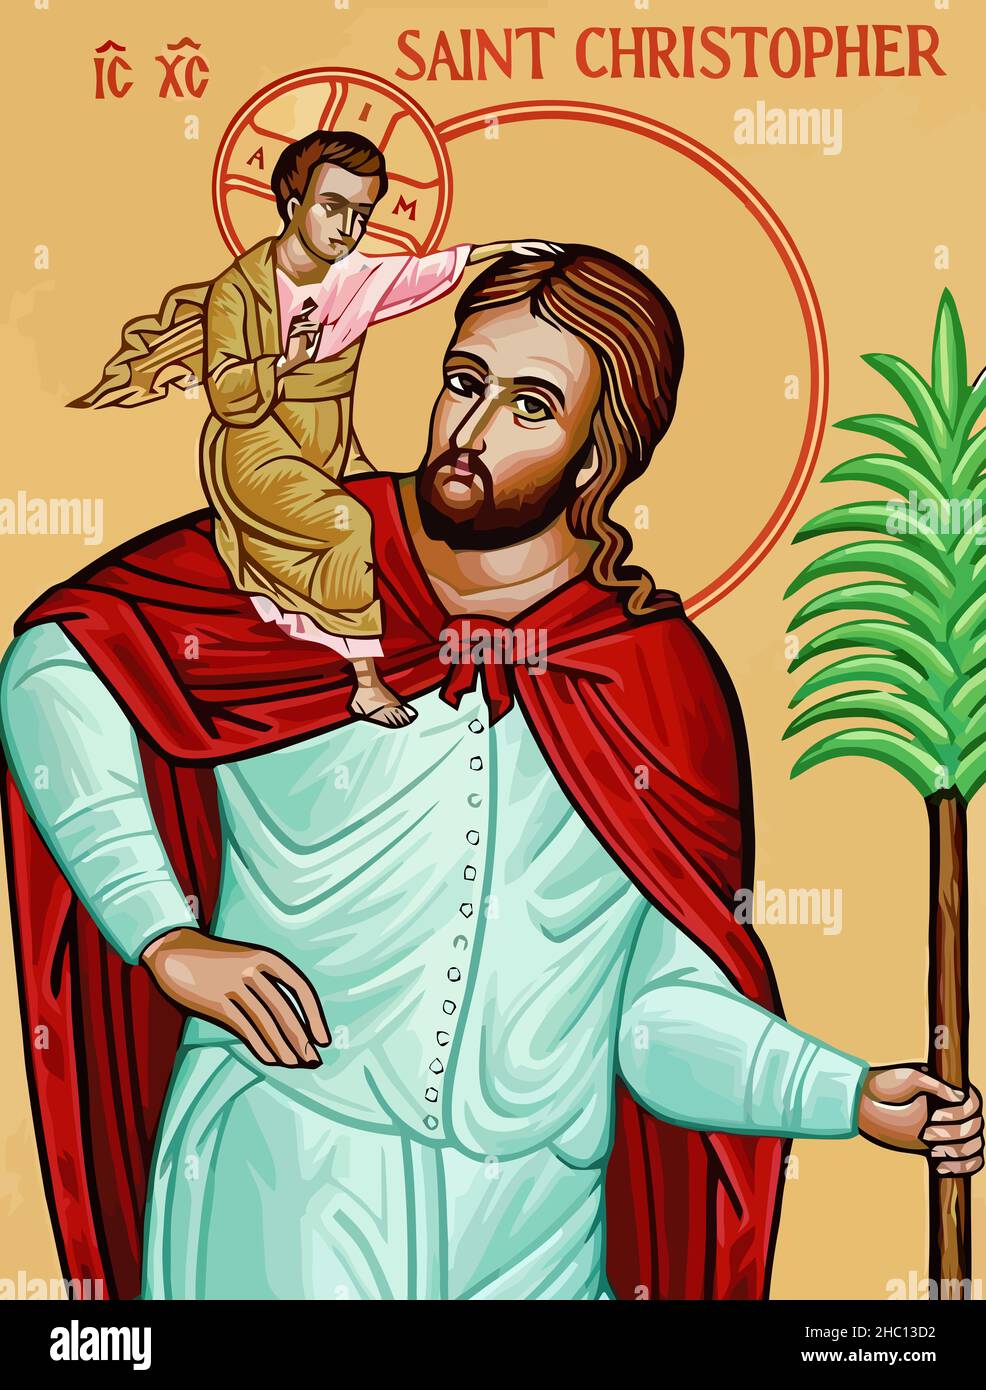 saint christopher holy faith religion illustration Stock Photo